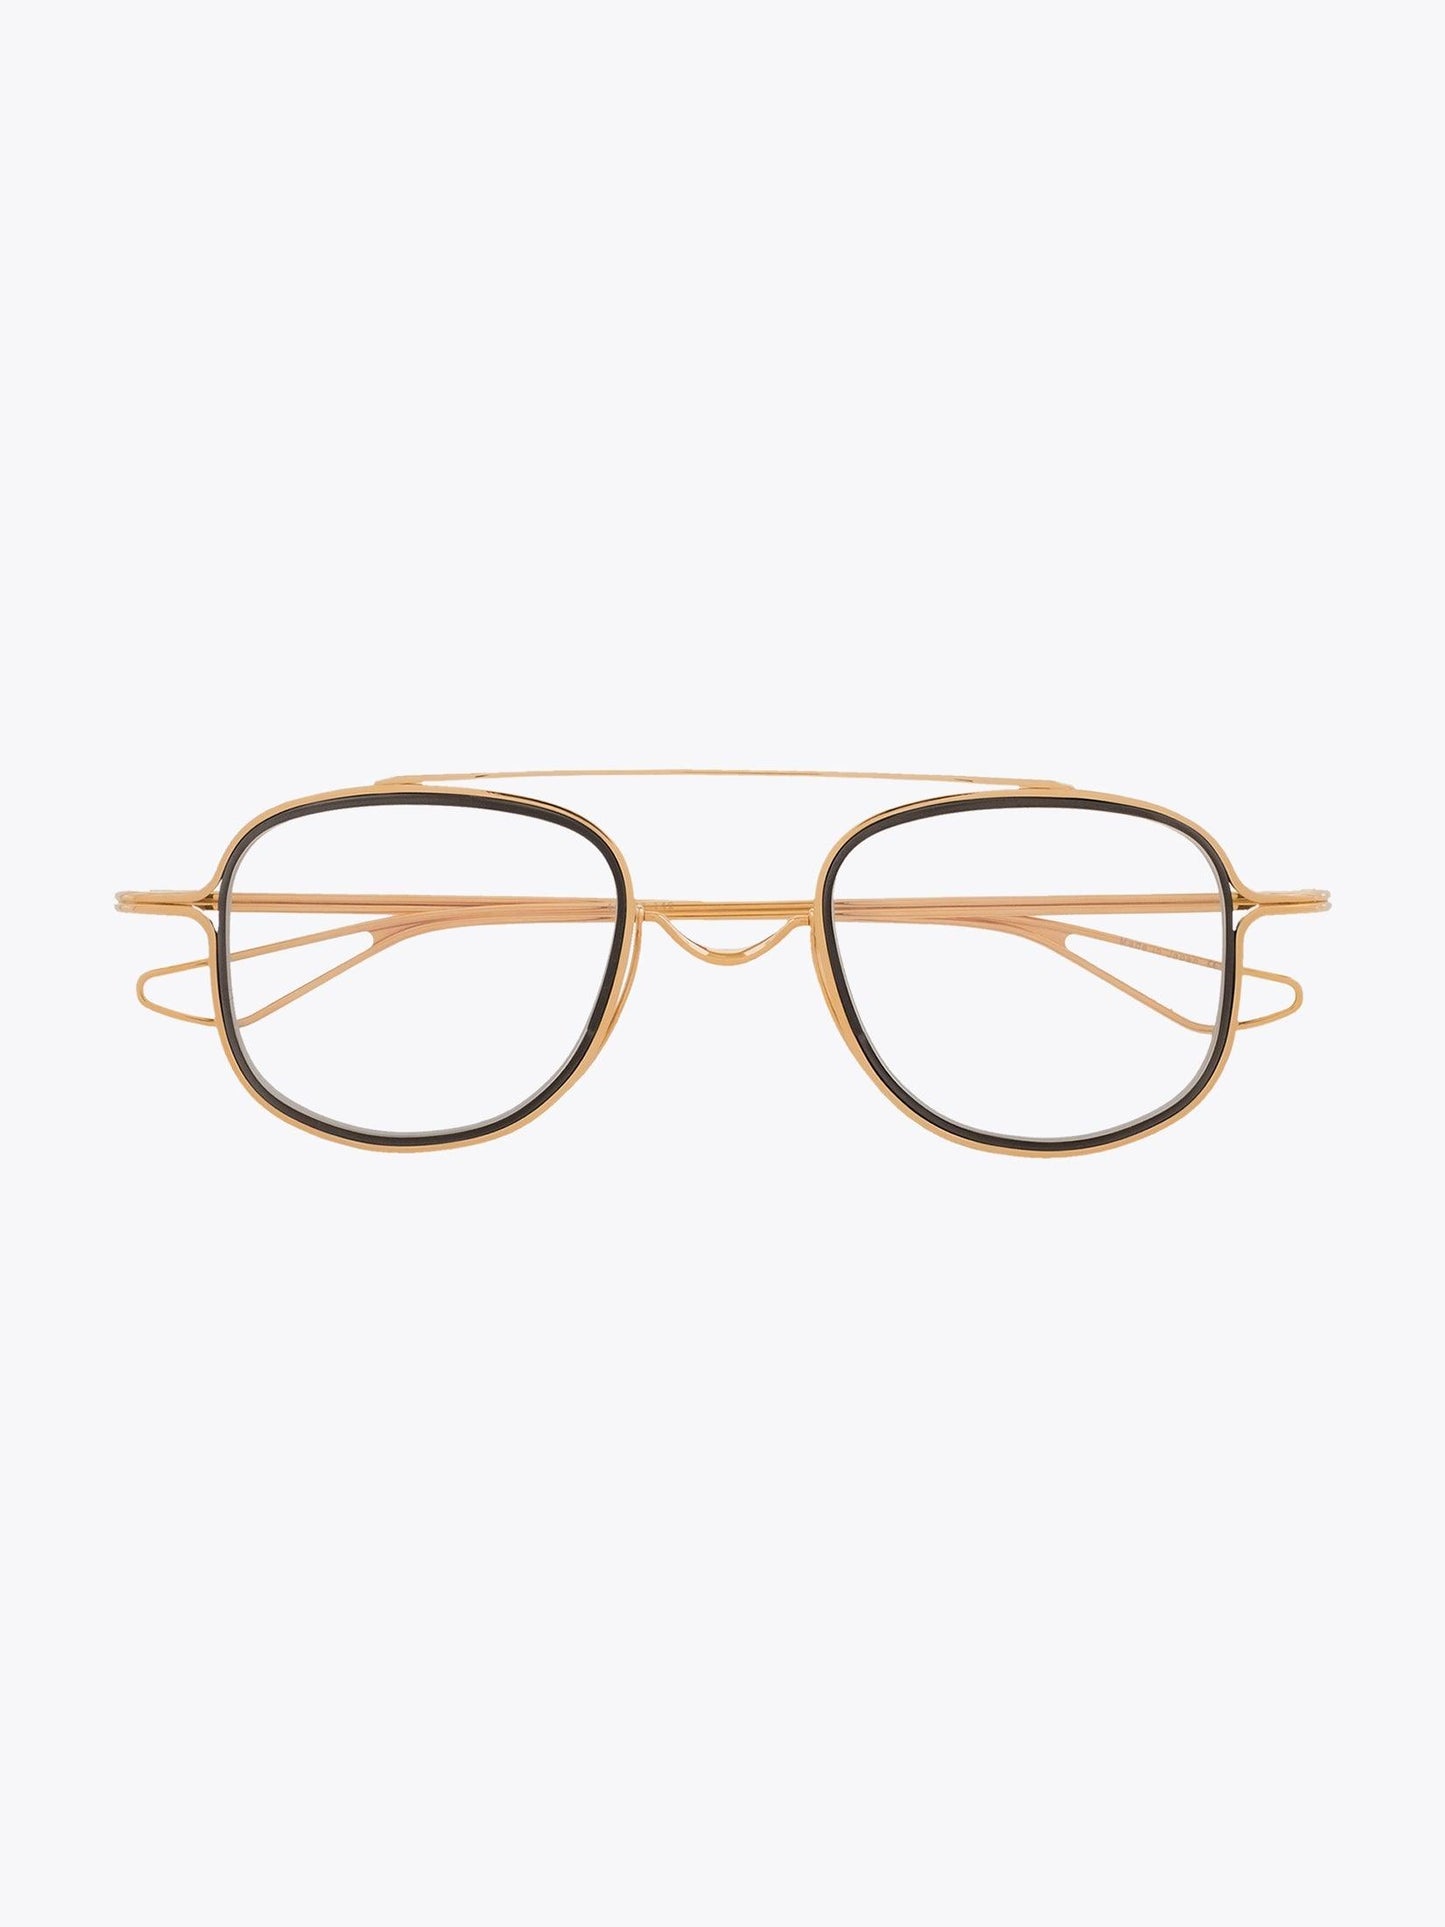 DITA Tessel Gold/Black Eyeglasses - Apodep.com